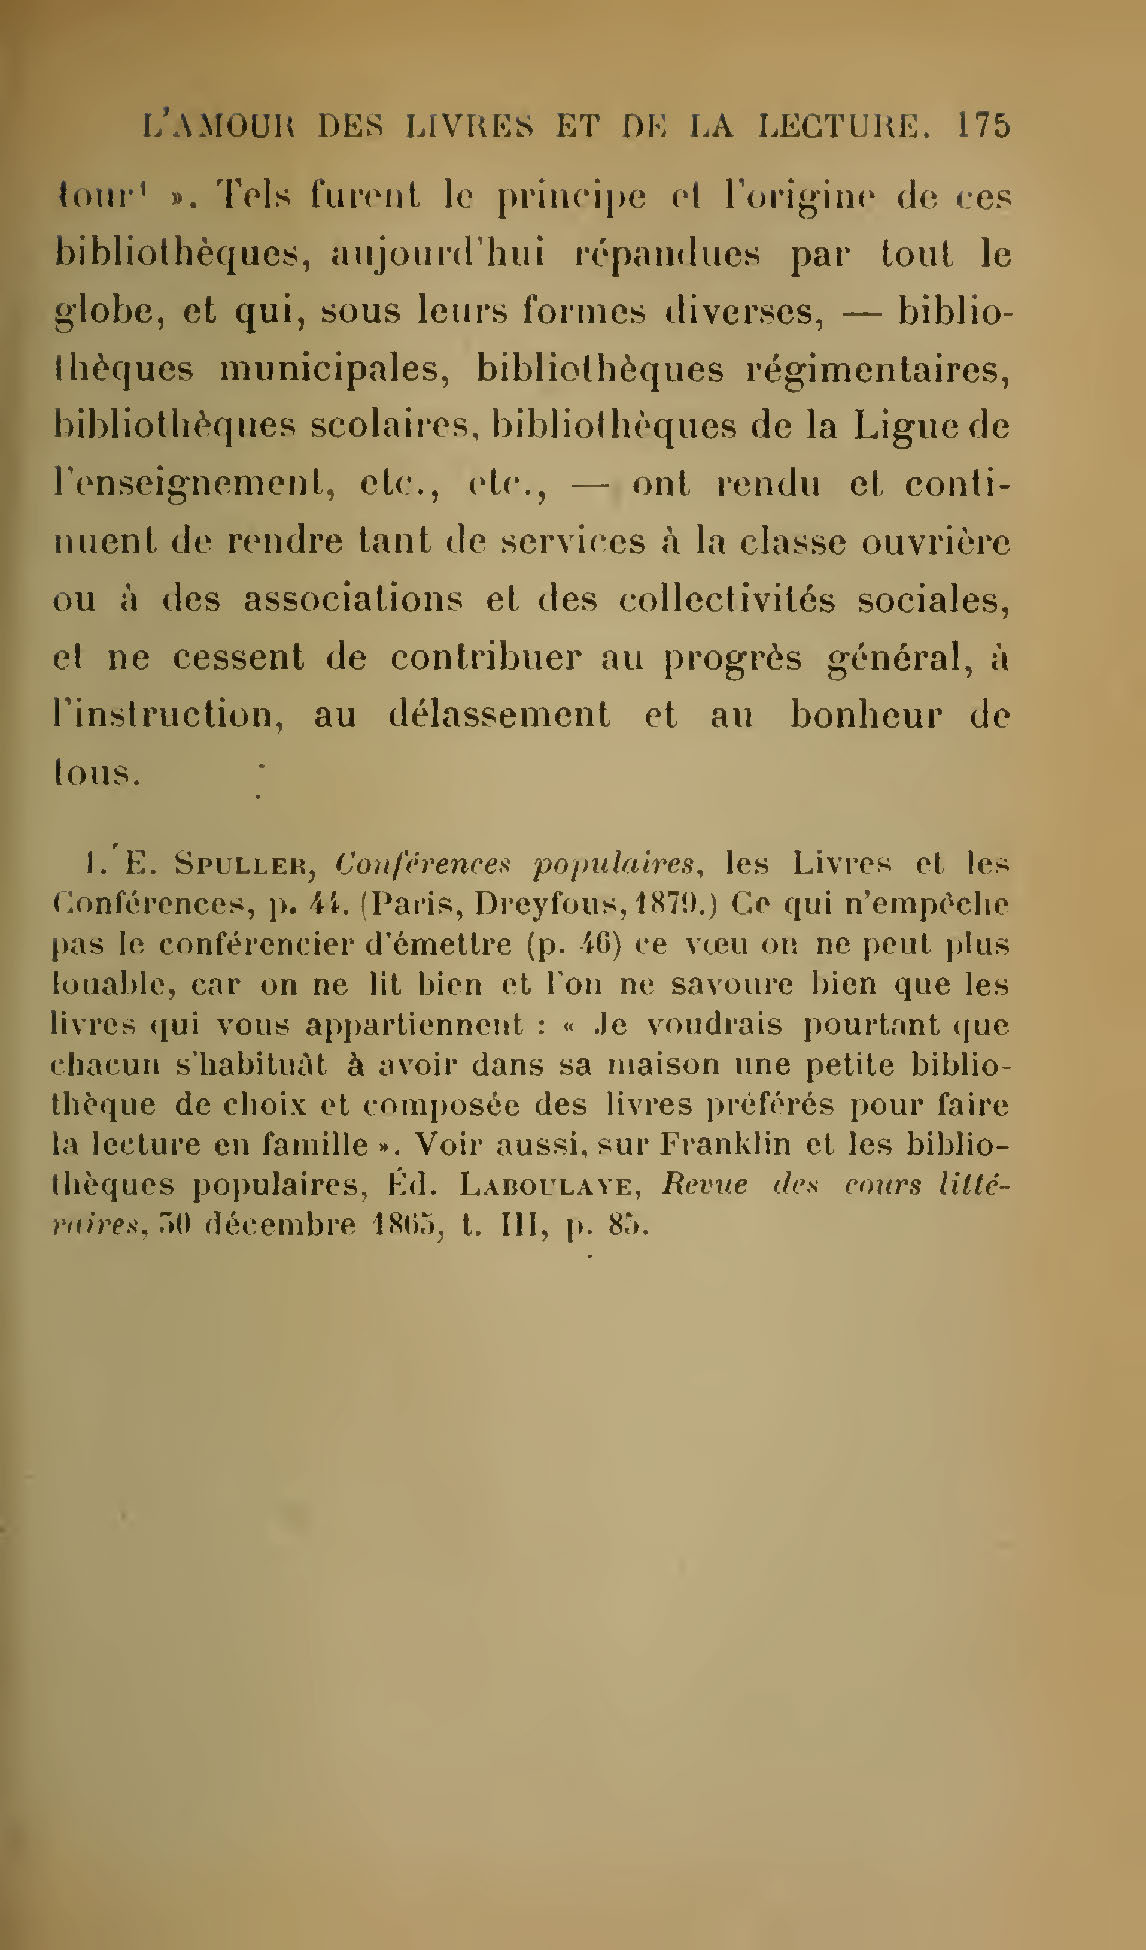 Albert Cim, Le Livre, t. I, p. 175.